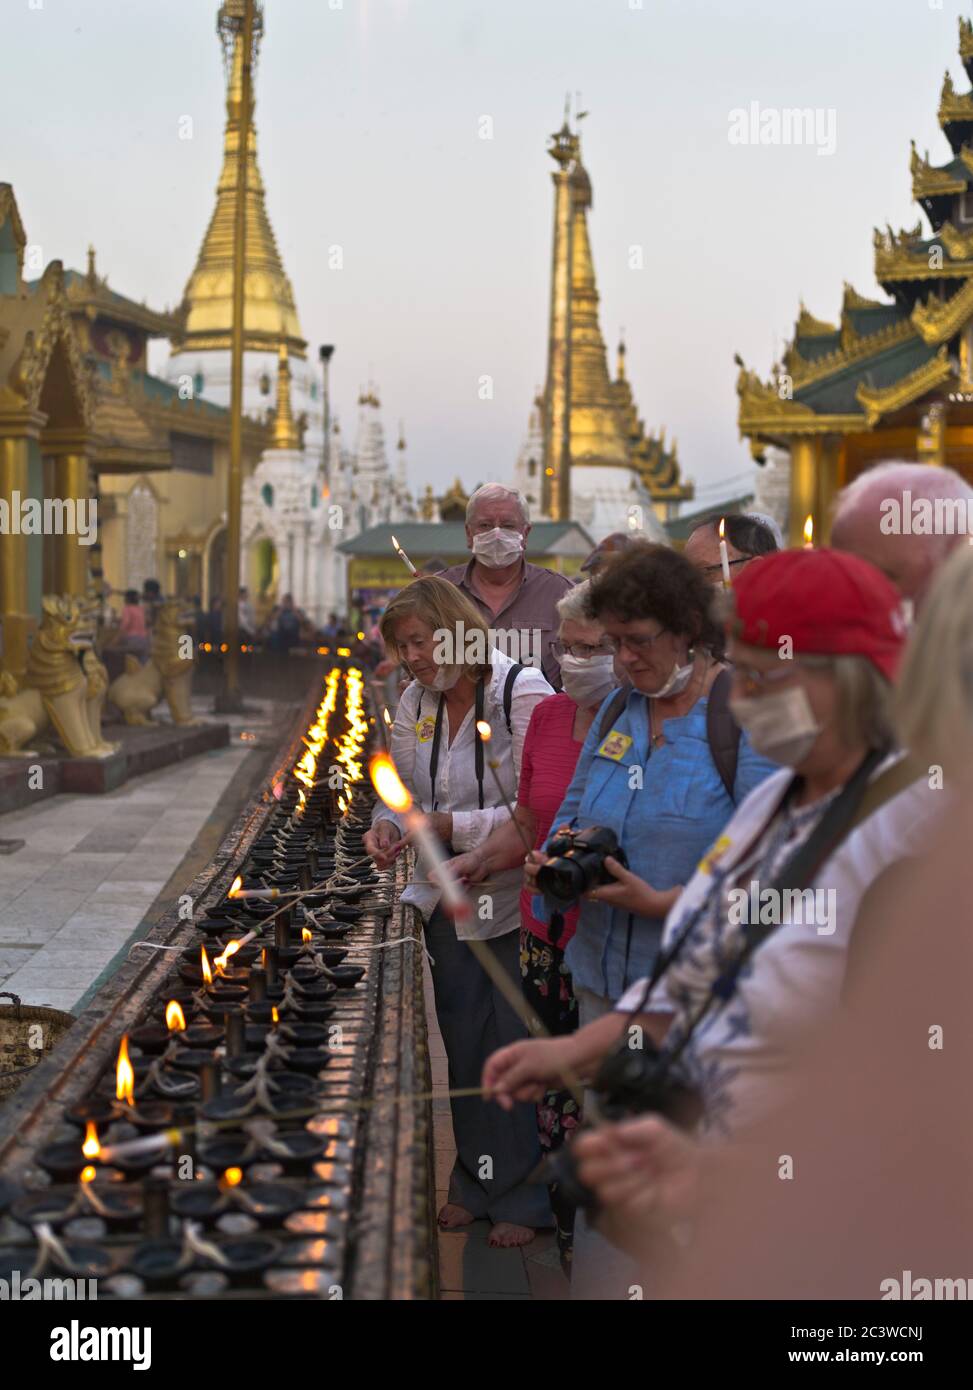 dh Shwedagon Pagoda tempio YANGON MYANMAR turisti buddisti illuminazione candela Zedi Daw luce candele rituali religiosi turisti gente cerimonia asia Foto Stock